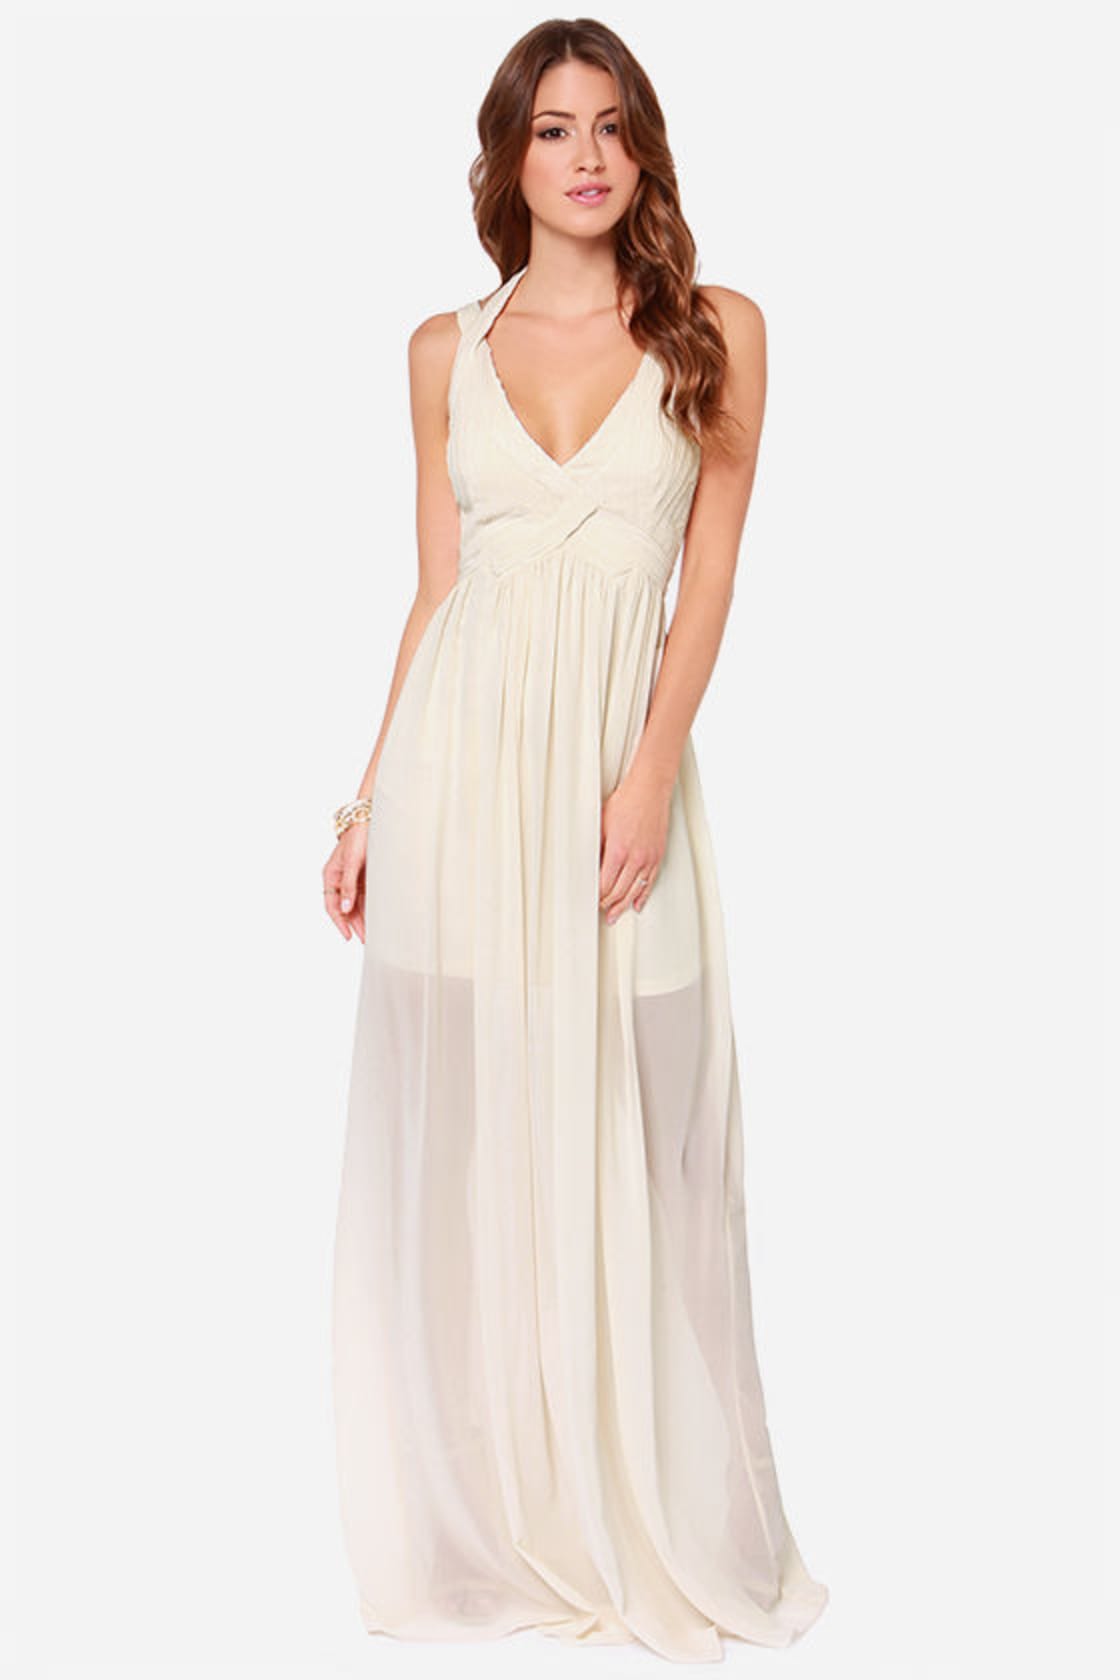 Cream Maxi Dress - Pleated Maxi Dress - Cream Dress - $77.00 - Lulus